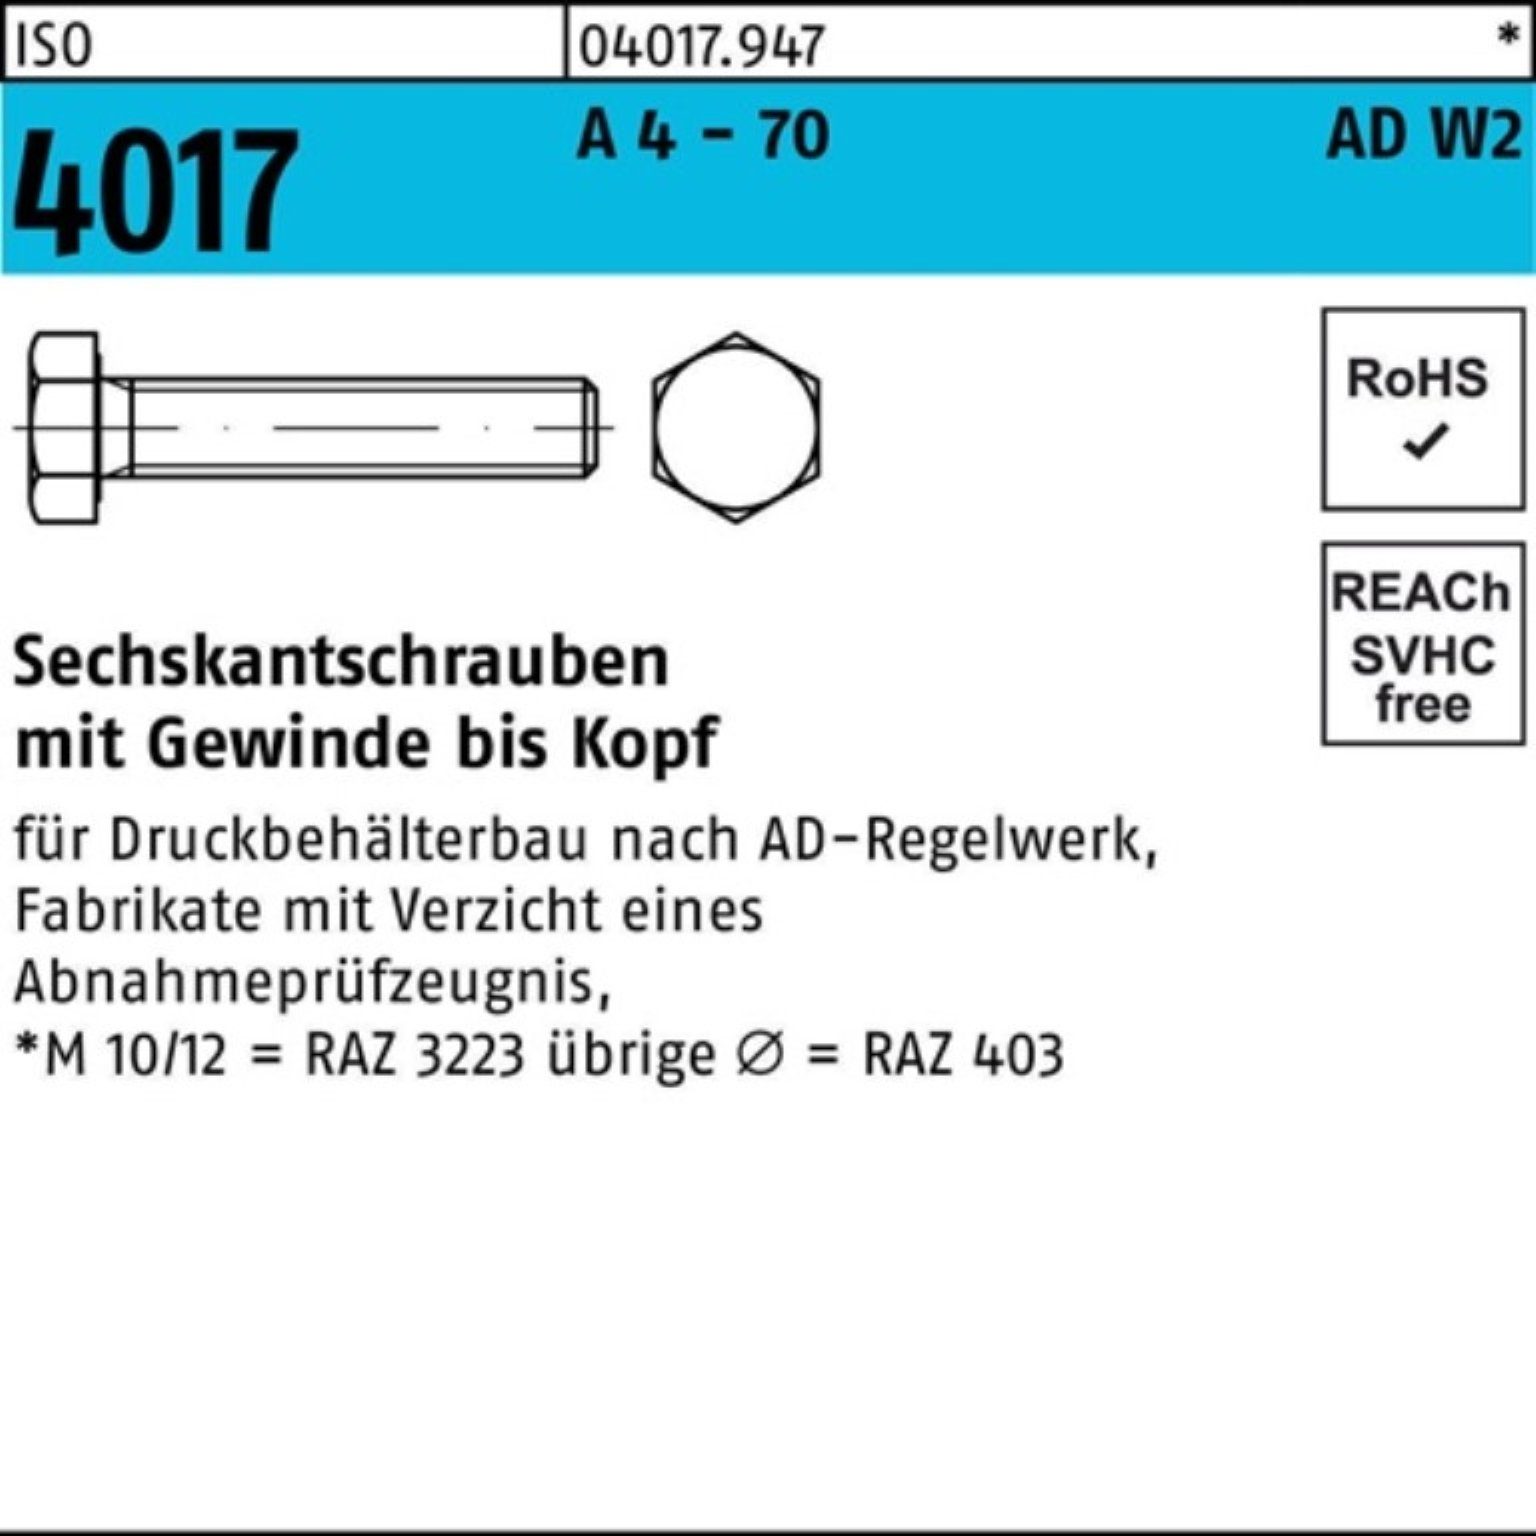 Bufab Sechskantschraube 200er Pack Sechskantschraube M6x ISO 4 AD-W2 St 70 200 VG 16 4017 A 